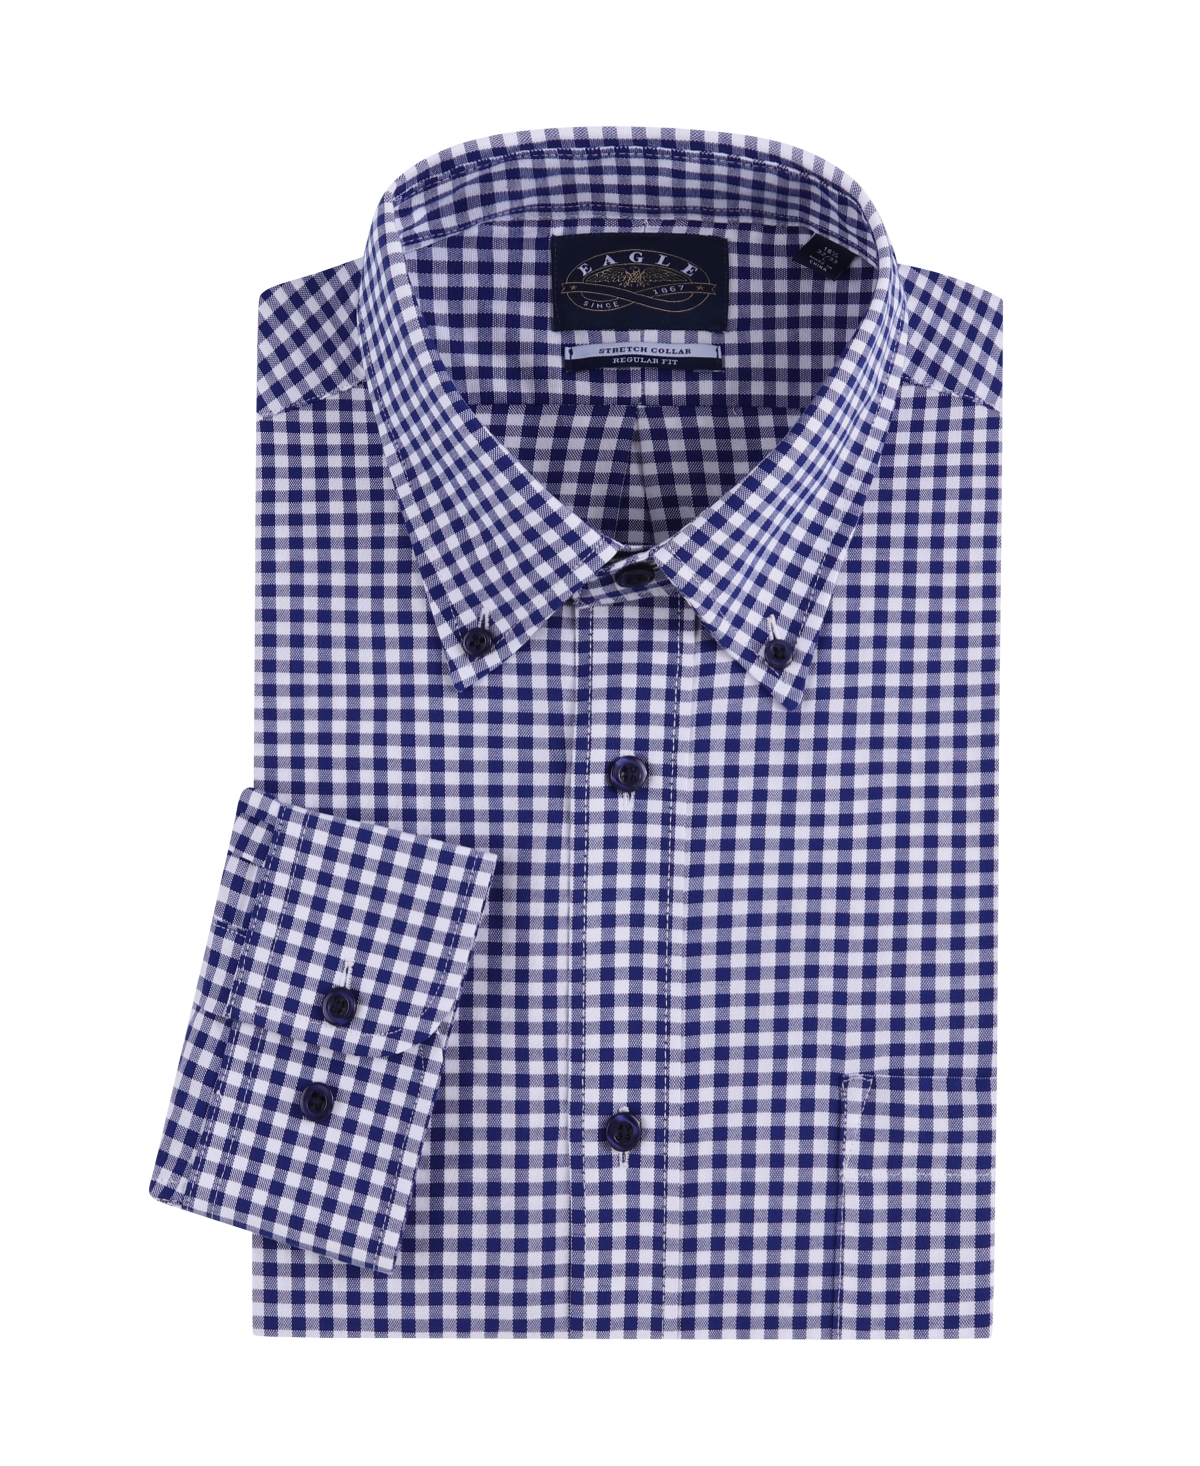 Men's Mini-Check Poplin Shirt with Stretch Collar - Light blue